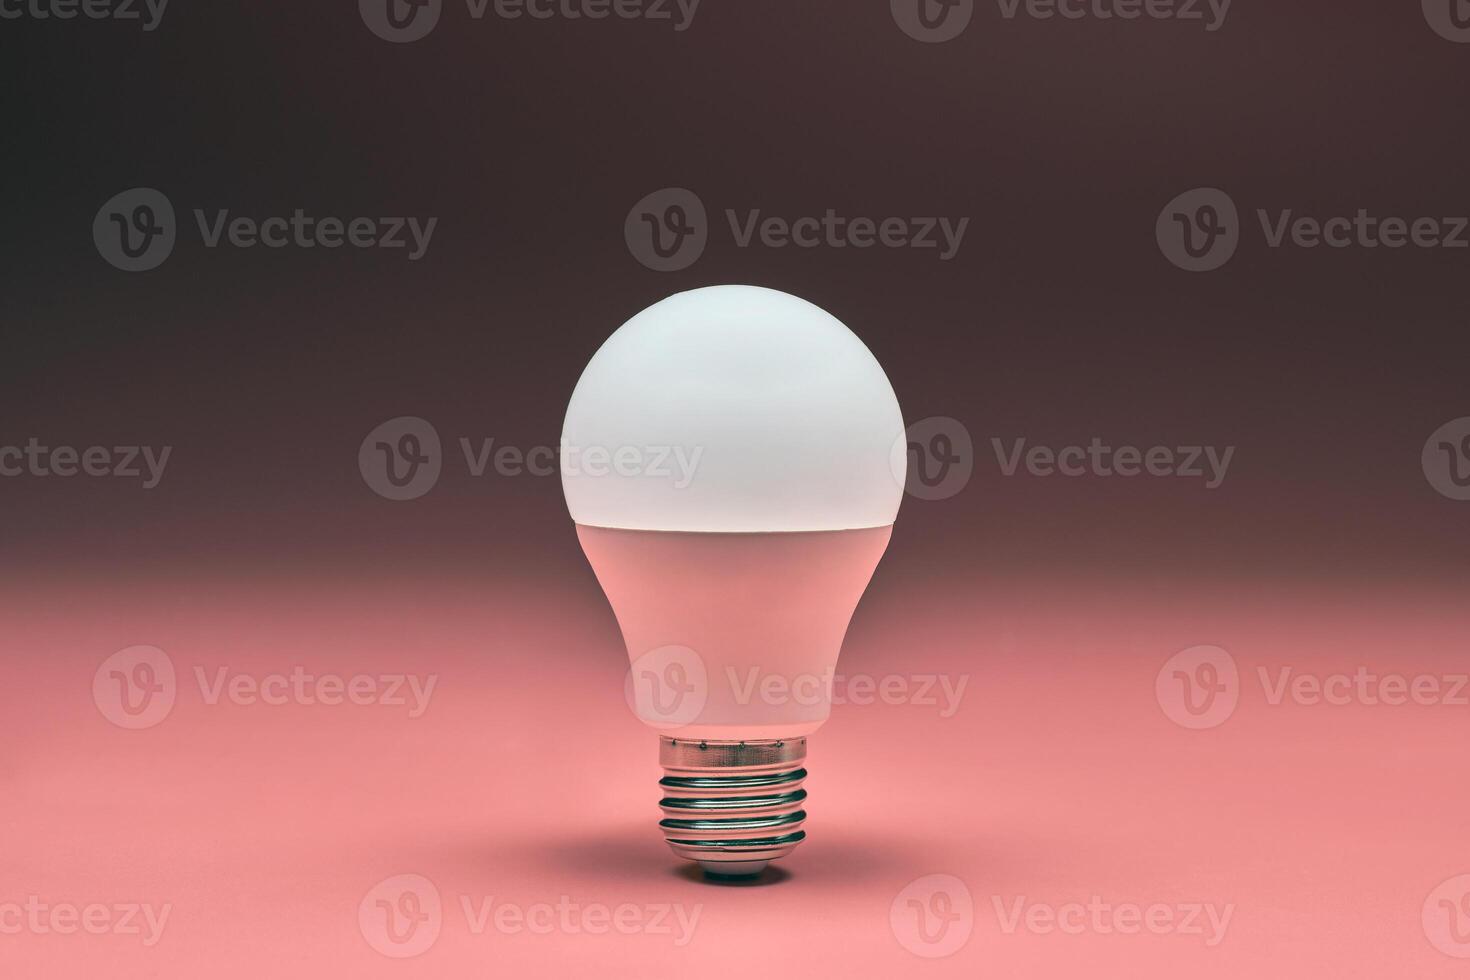 Light bulb, copy space. Energy saving minimal idea concept.Pink background. photo